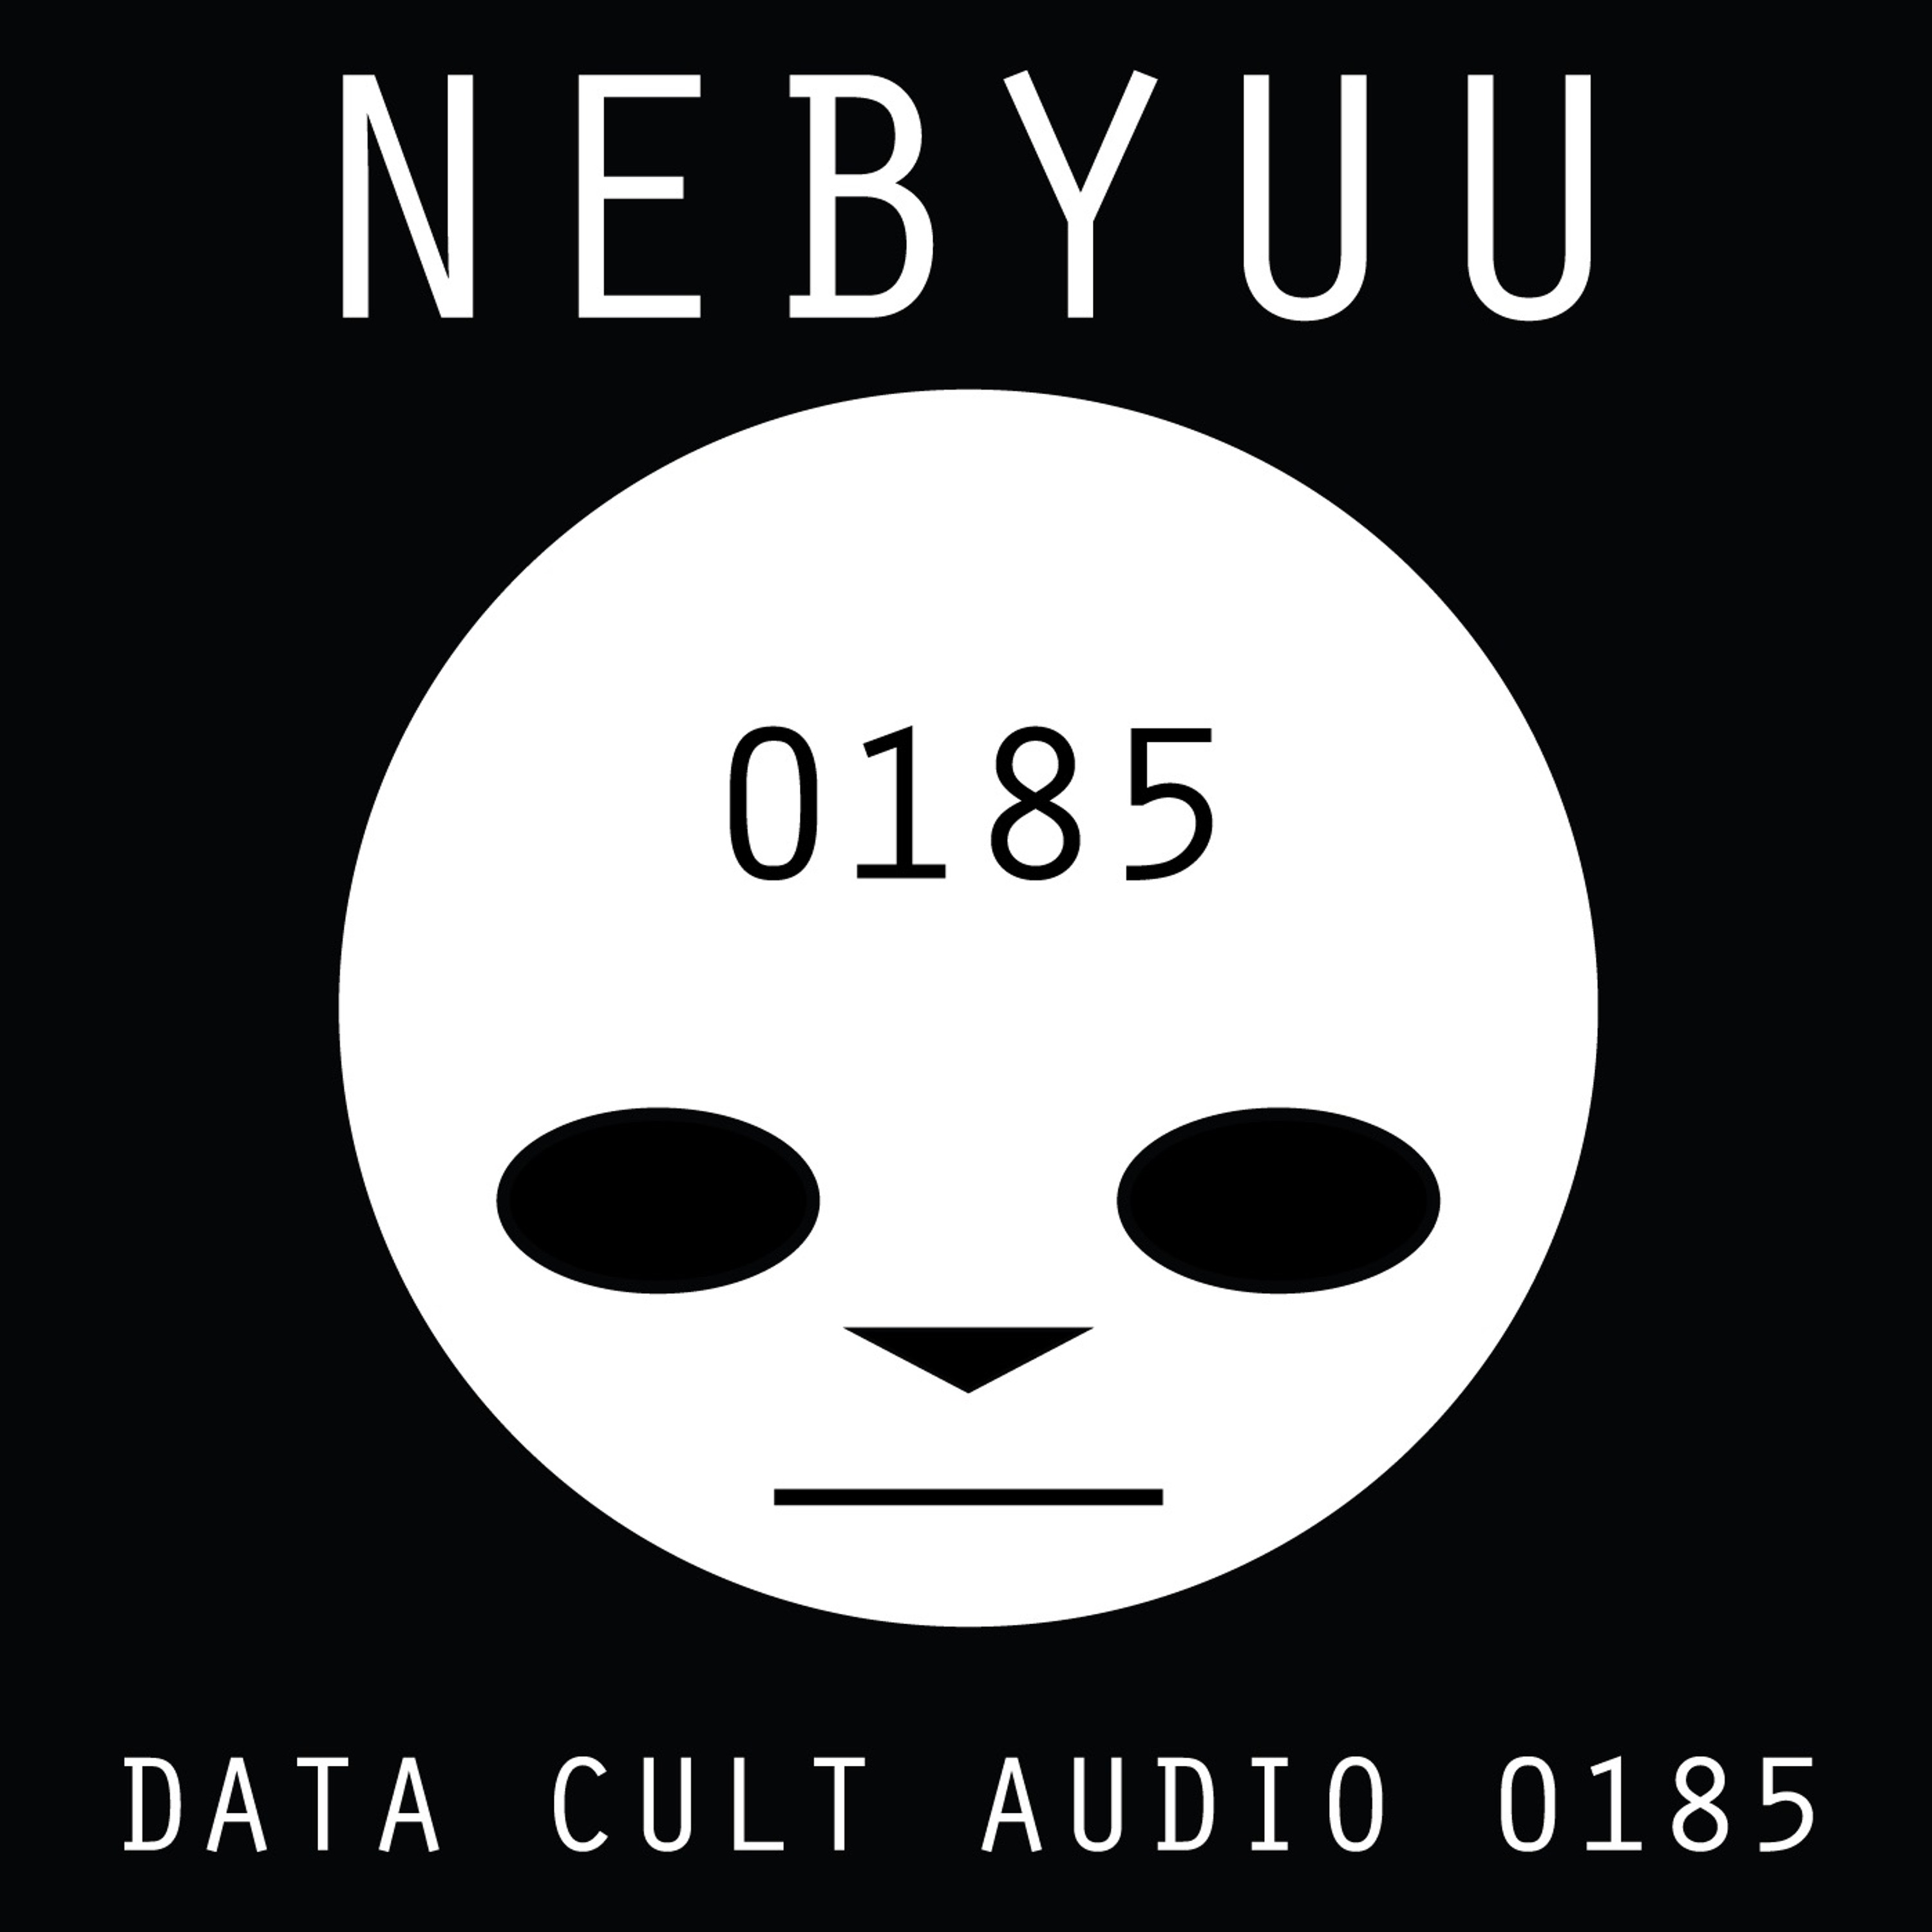 Data Cult Audio 0185 - Neybuu